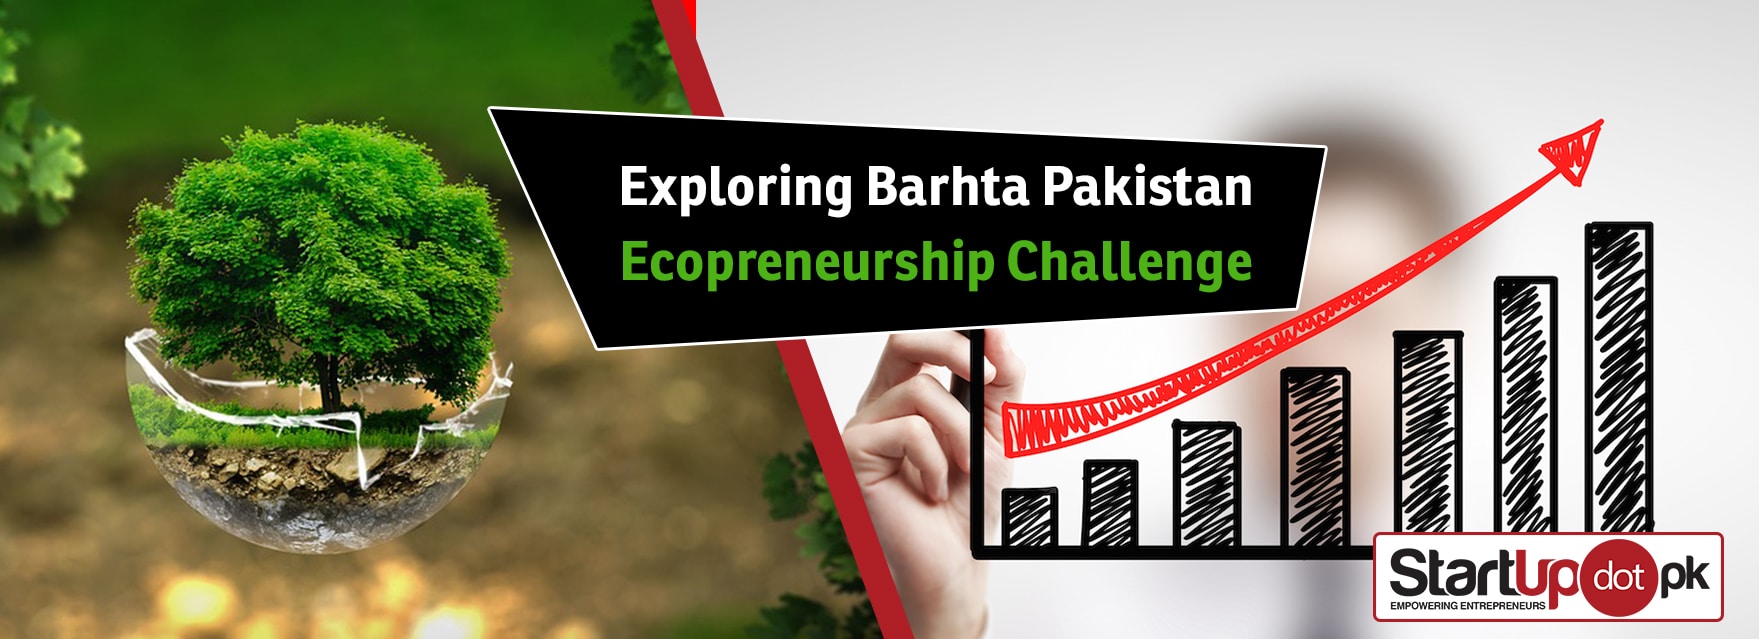 barhta pakistan Ecopreneurship Challenge